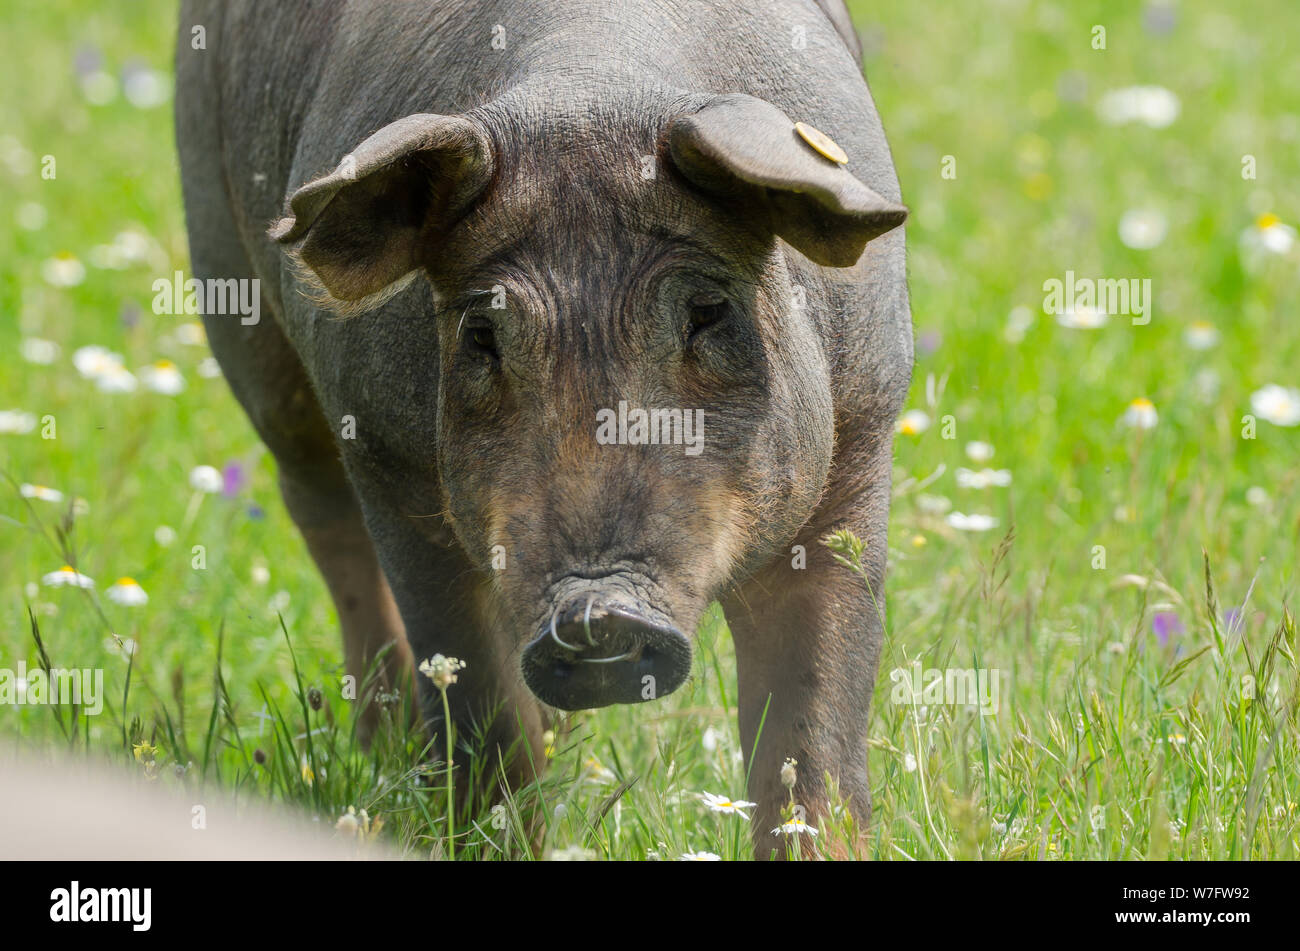 portrait of Iberian pig herd (pata negra) in a flower field Stock Photo